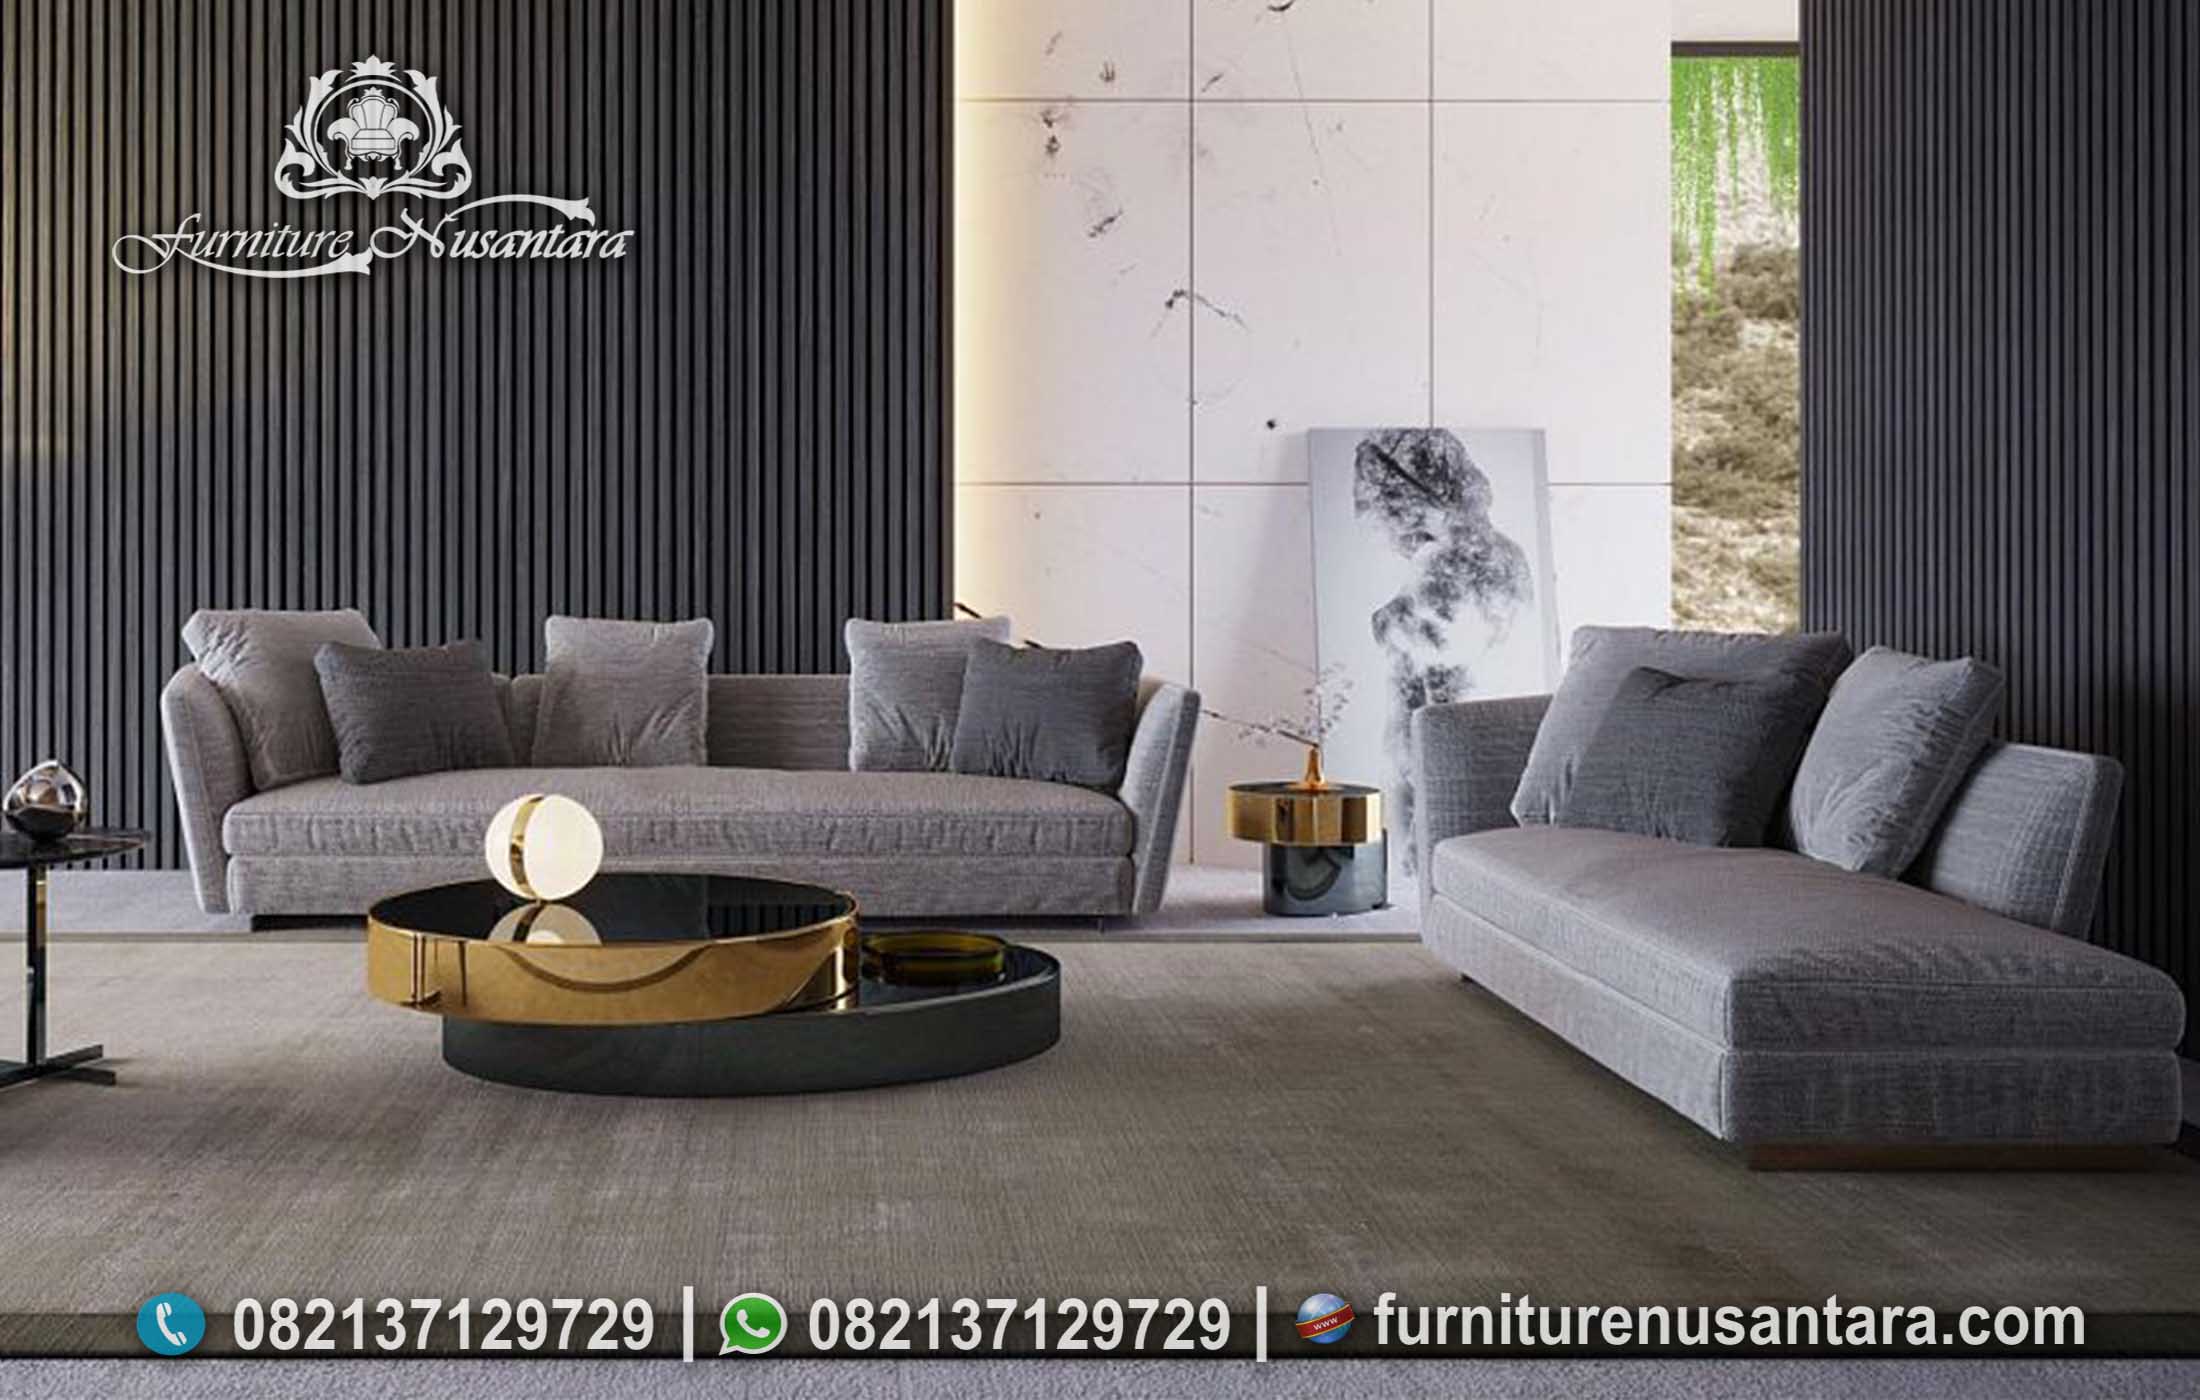 Inspirasi Sofa Minimalis Luxury Apartemen ST-06, Furniture Nusantara